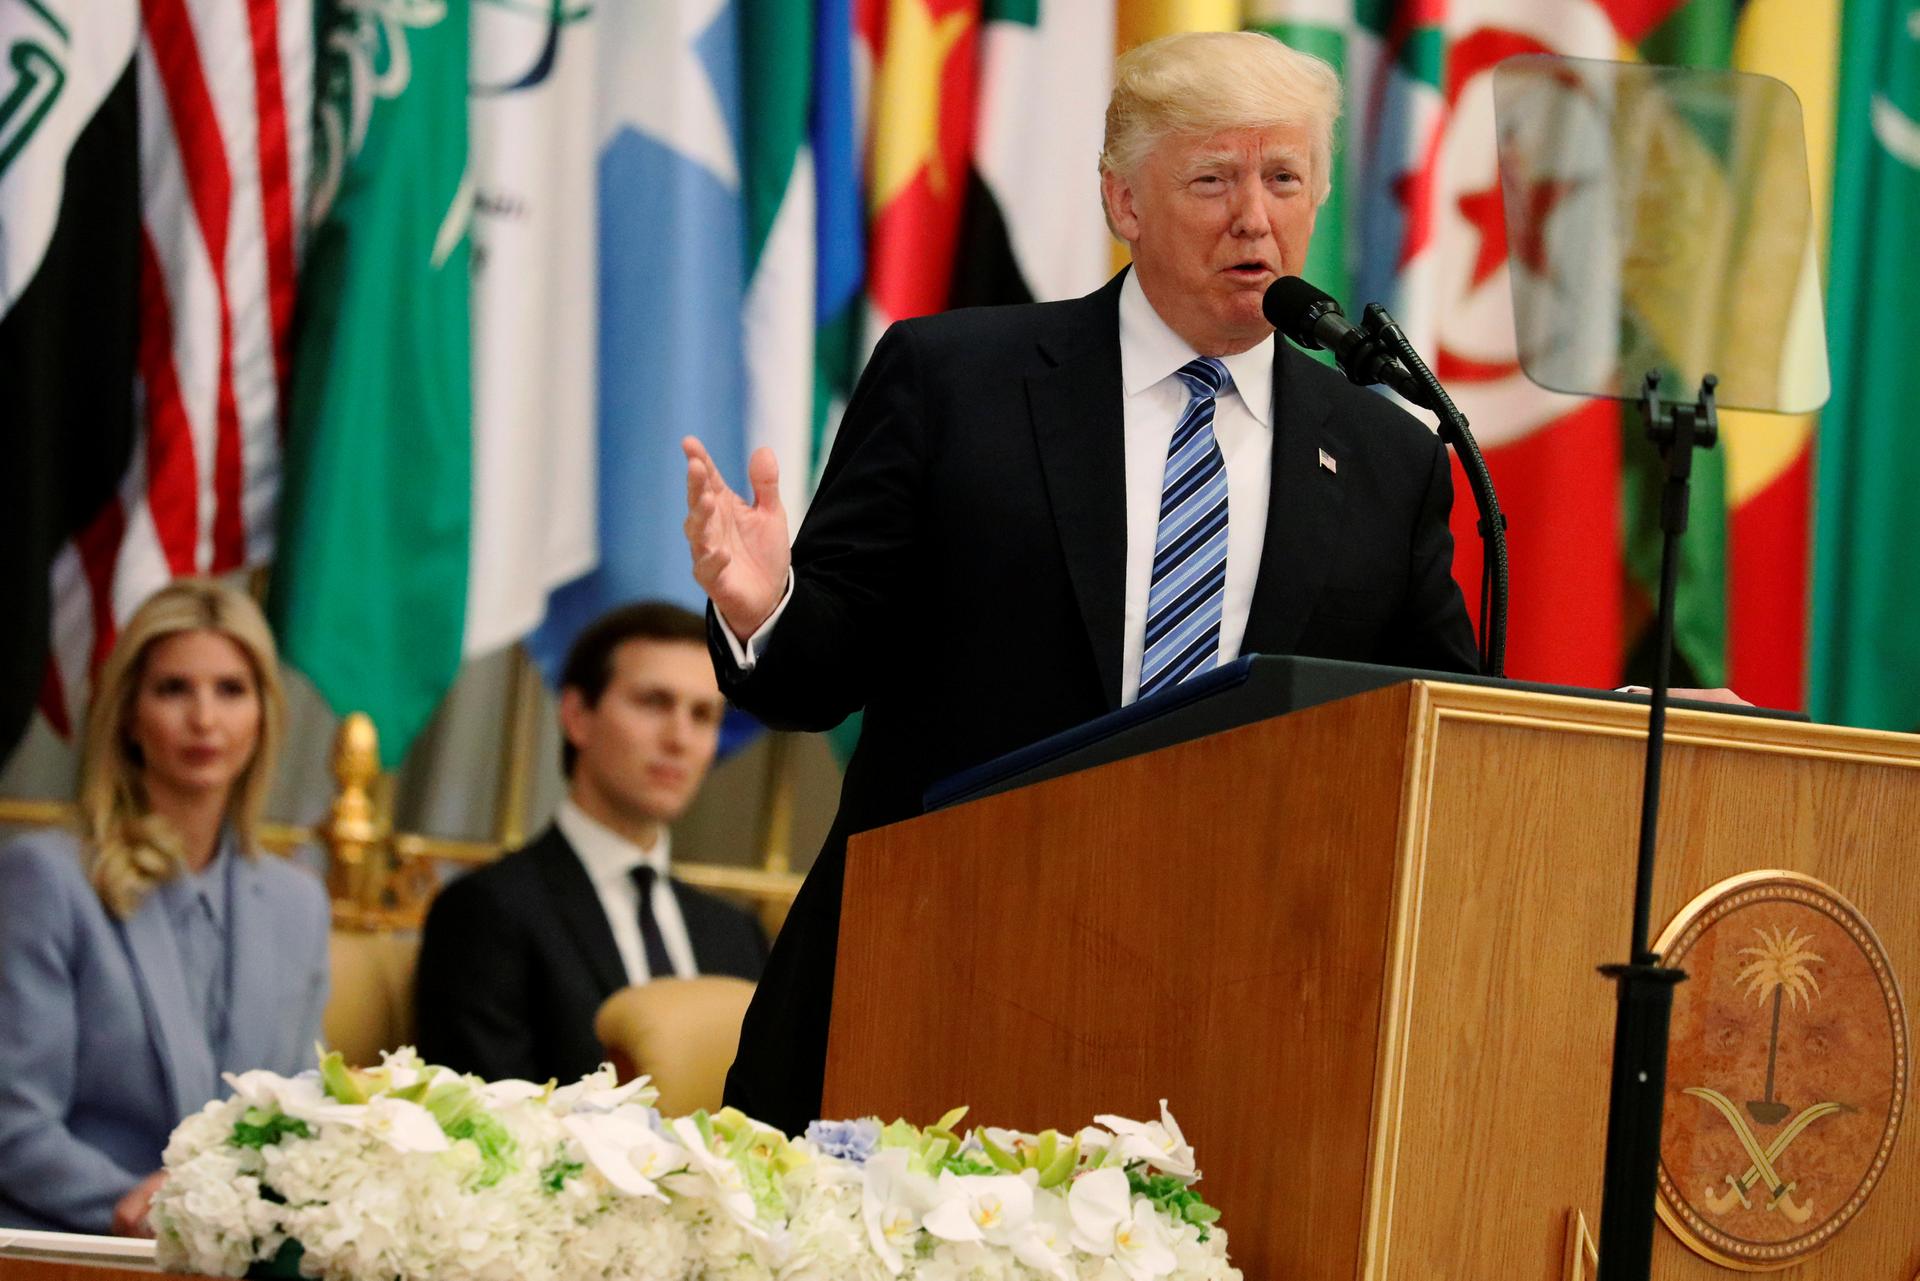 President Donald Trump before his speech to the Arab Islamic American Summit in Riyadh, Saudi Arabia, on May 21, 2017.